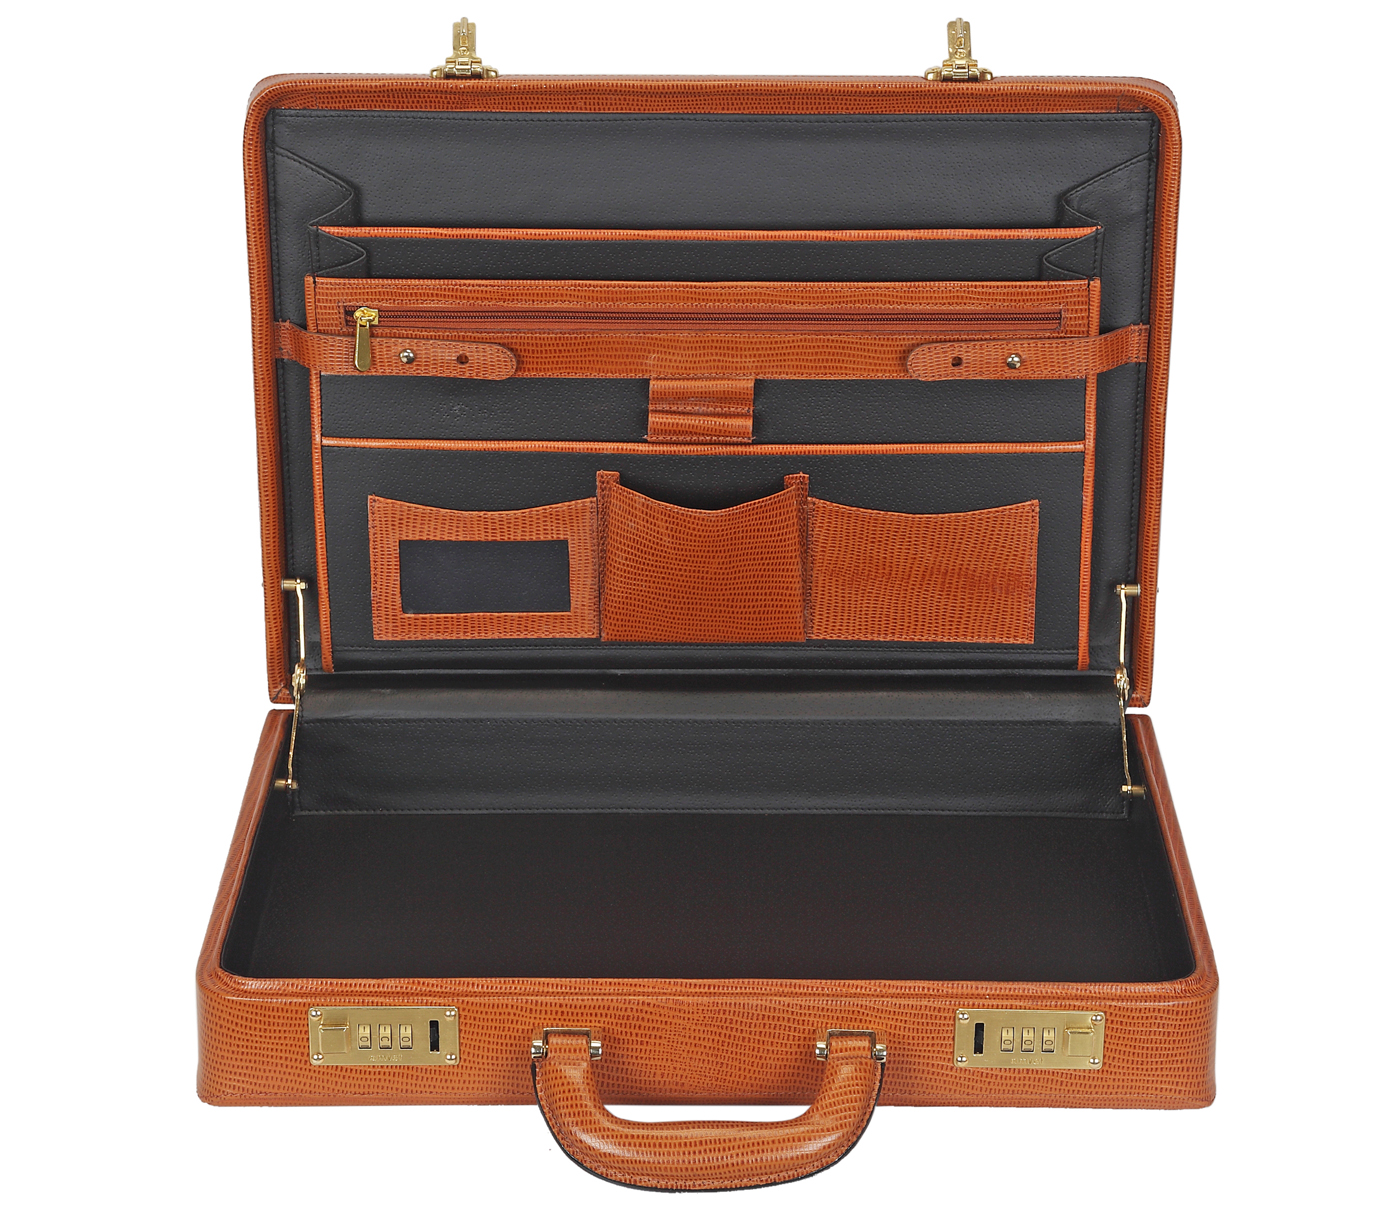 Briefcase / Attache's--Briefcase hard top in Genuine Leather - Tan